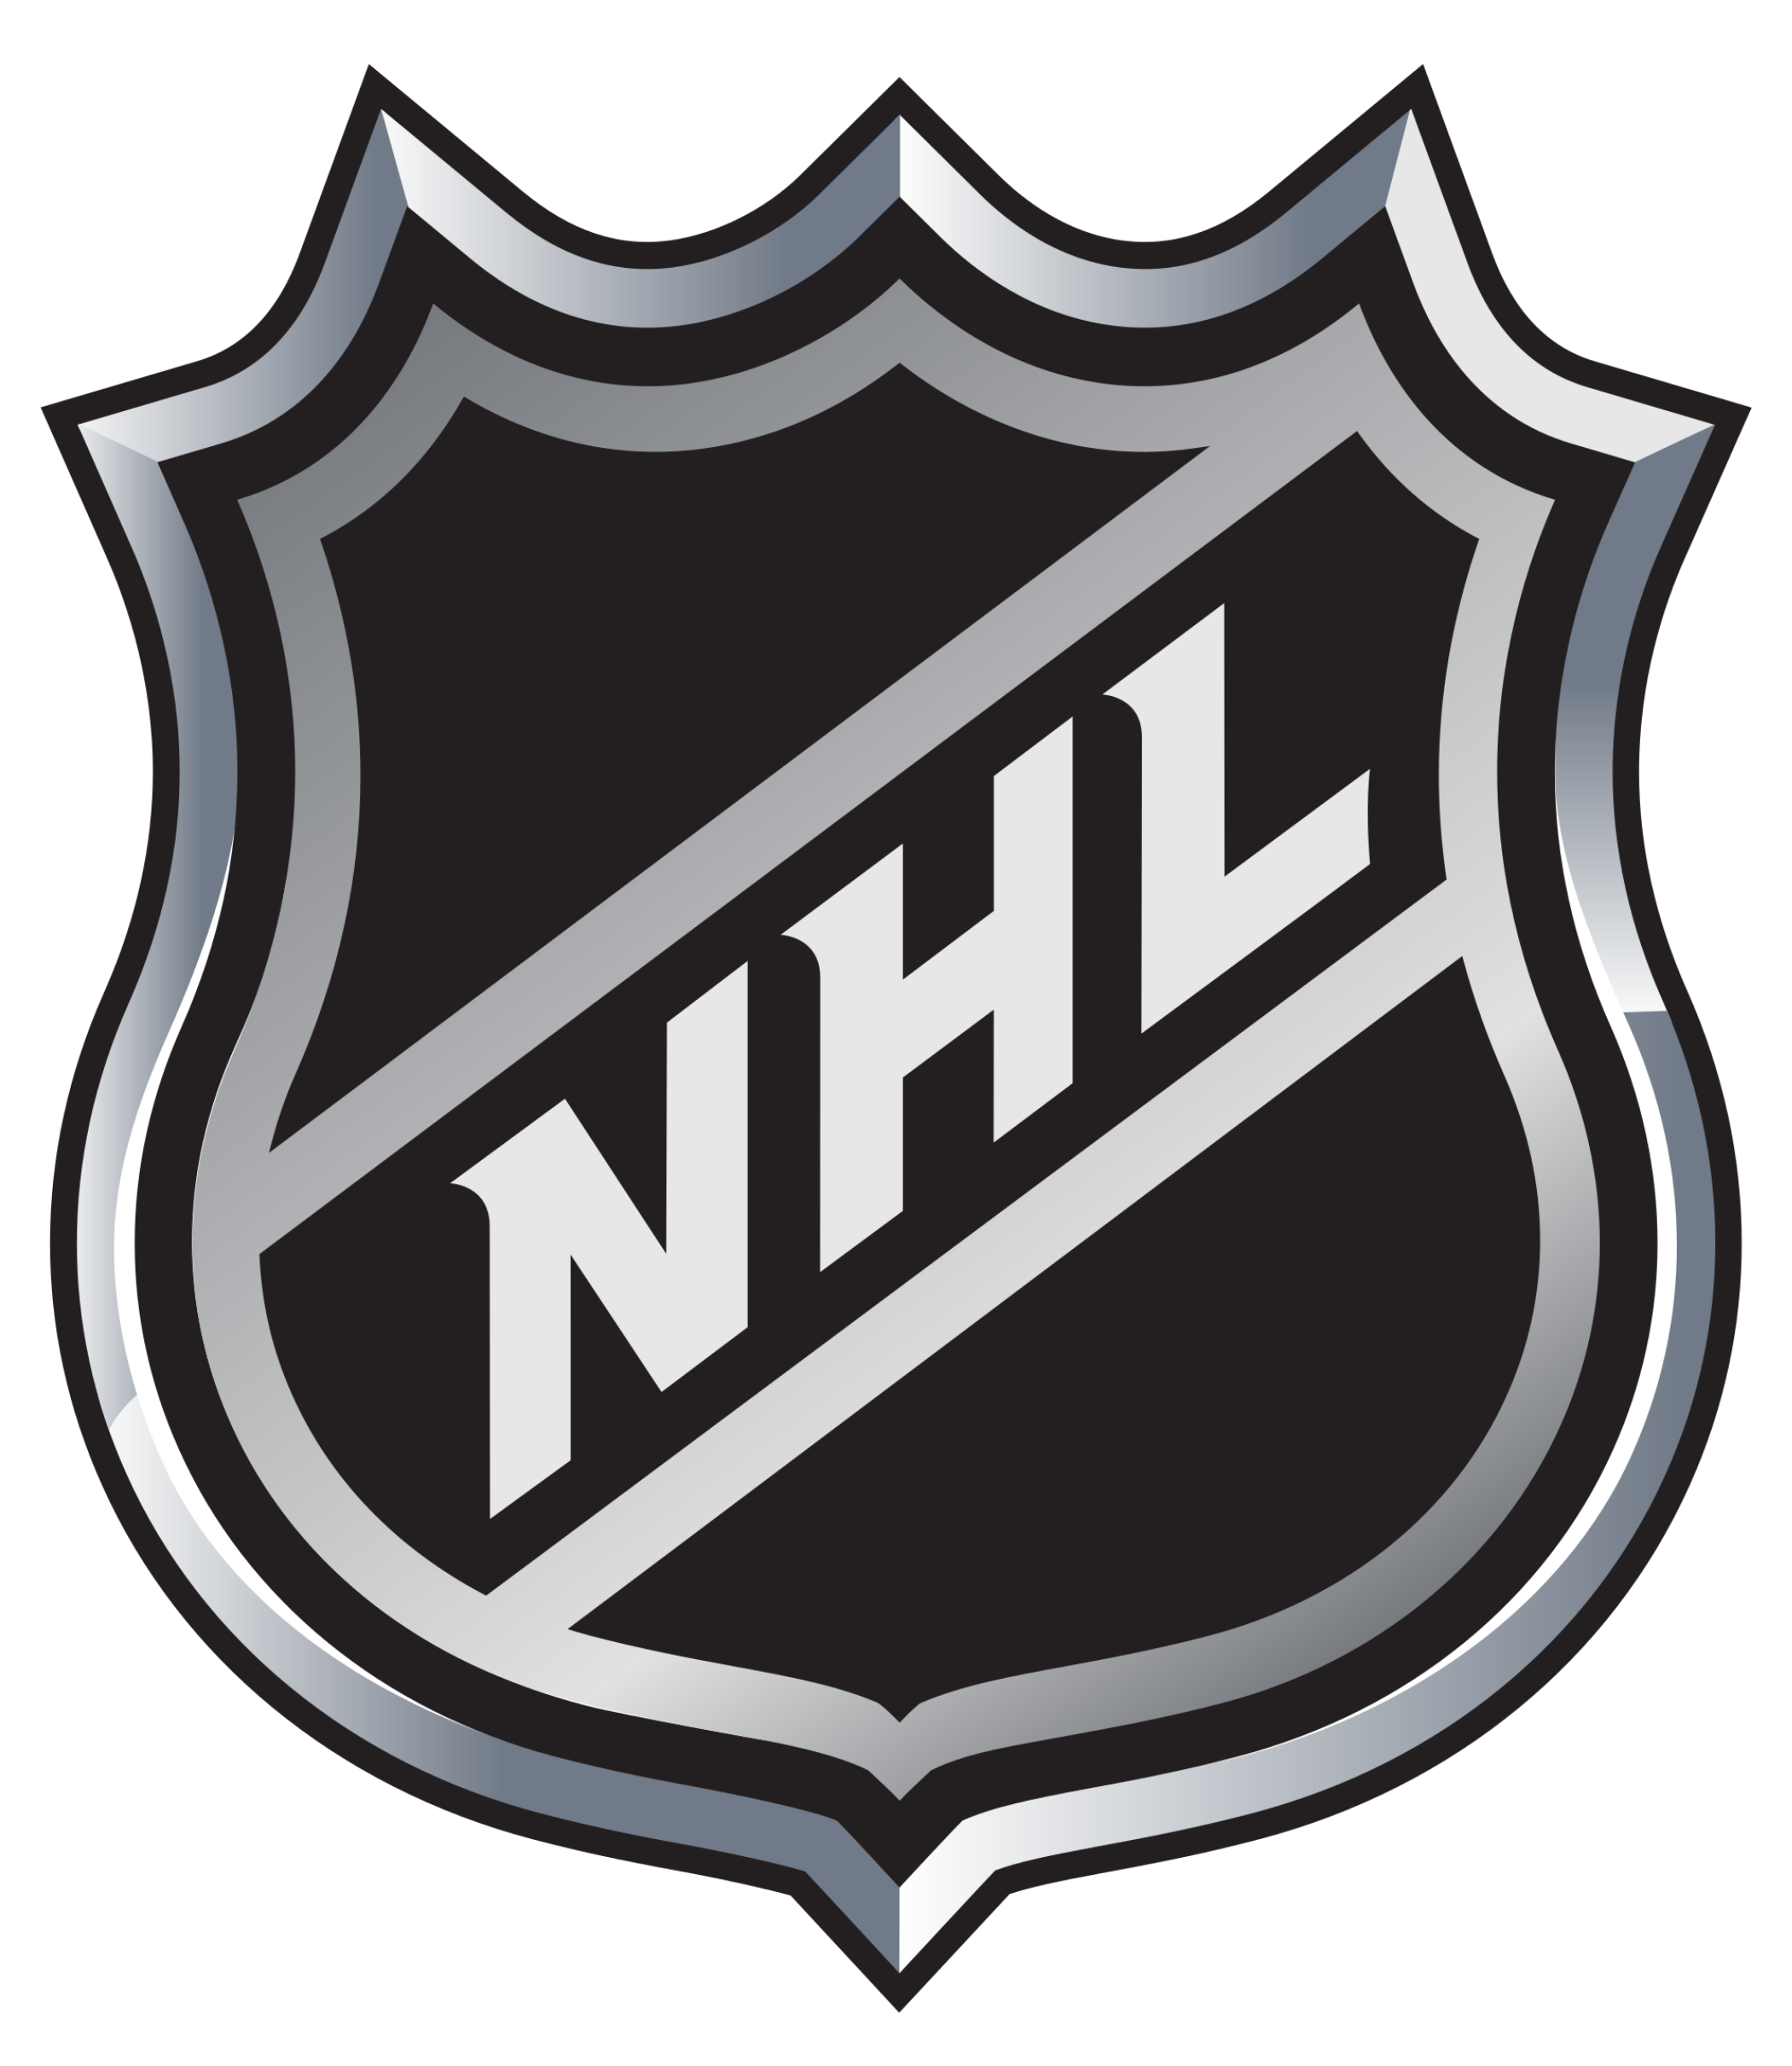 NHL - Sportsnet.ca